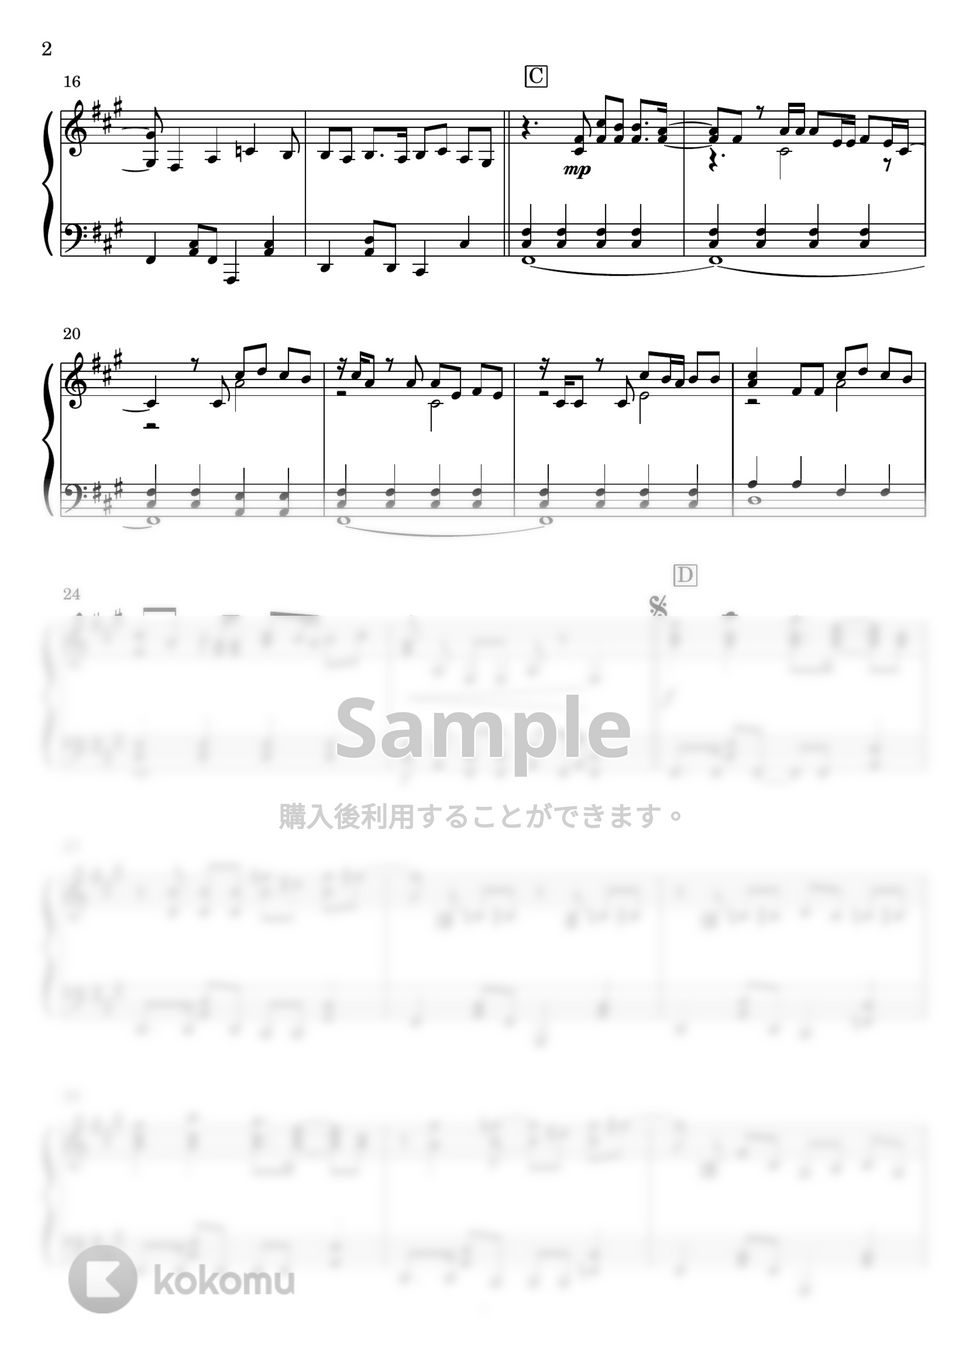 King Gnu - SPECIALZ  (フルver.) (ピアノソロ) by Miz